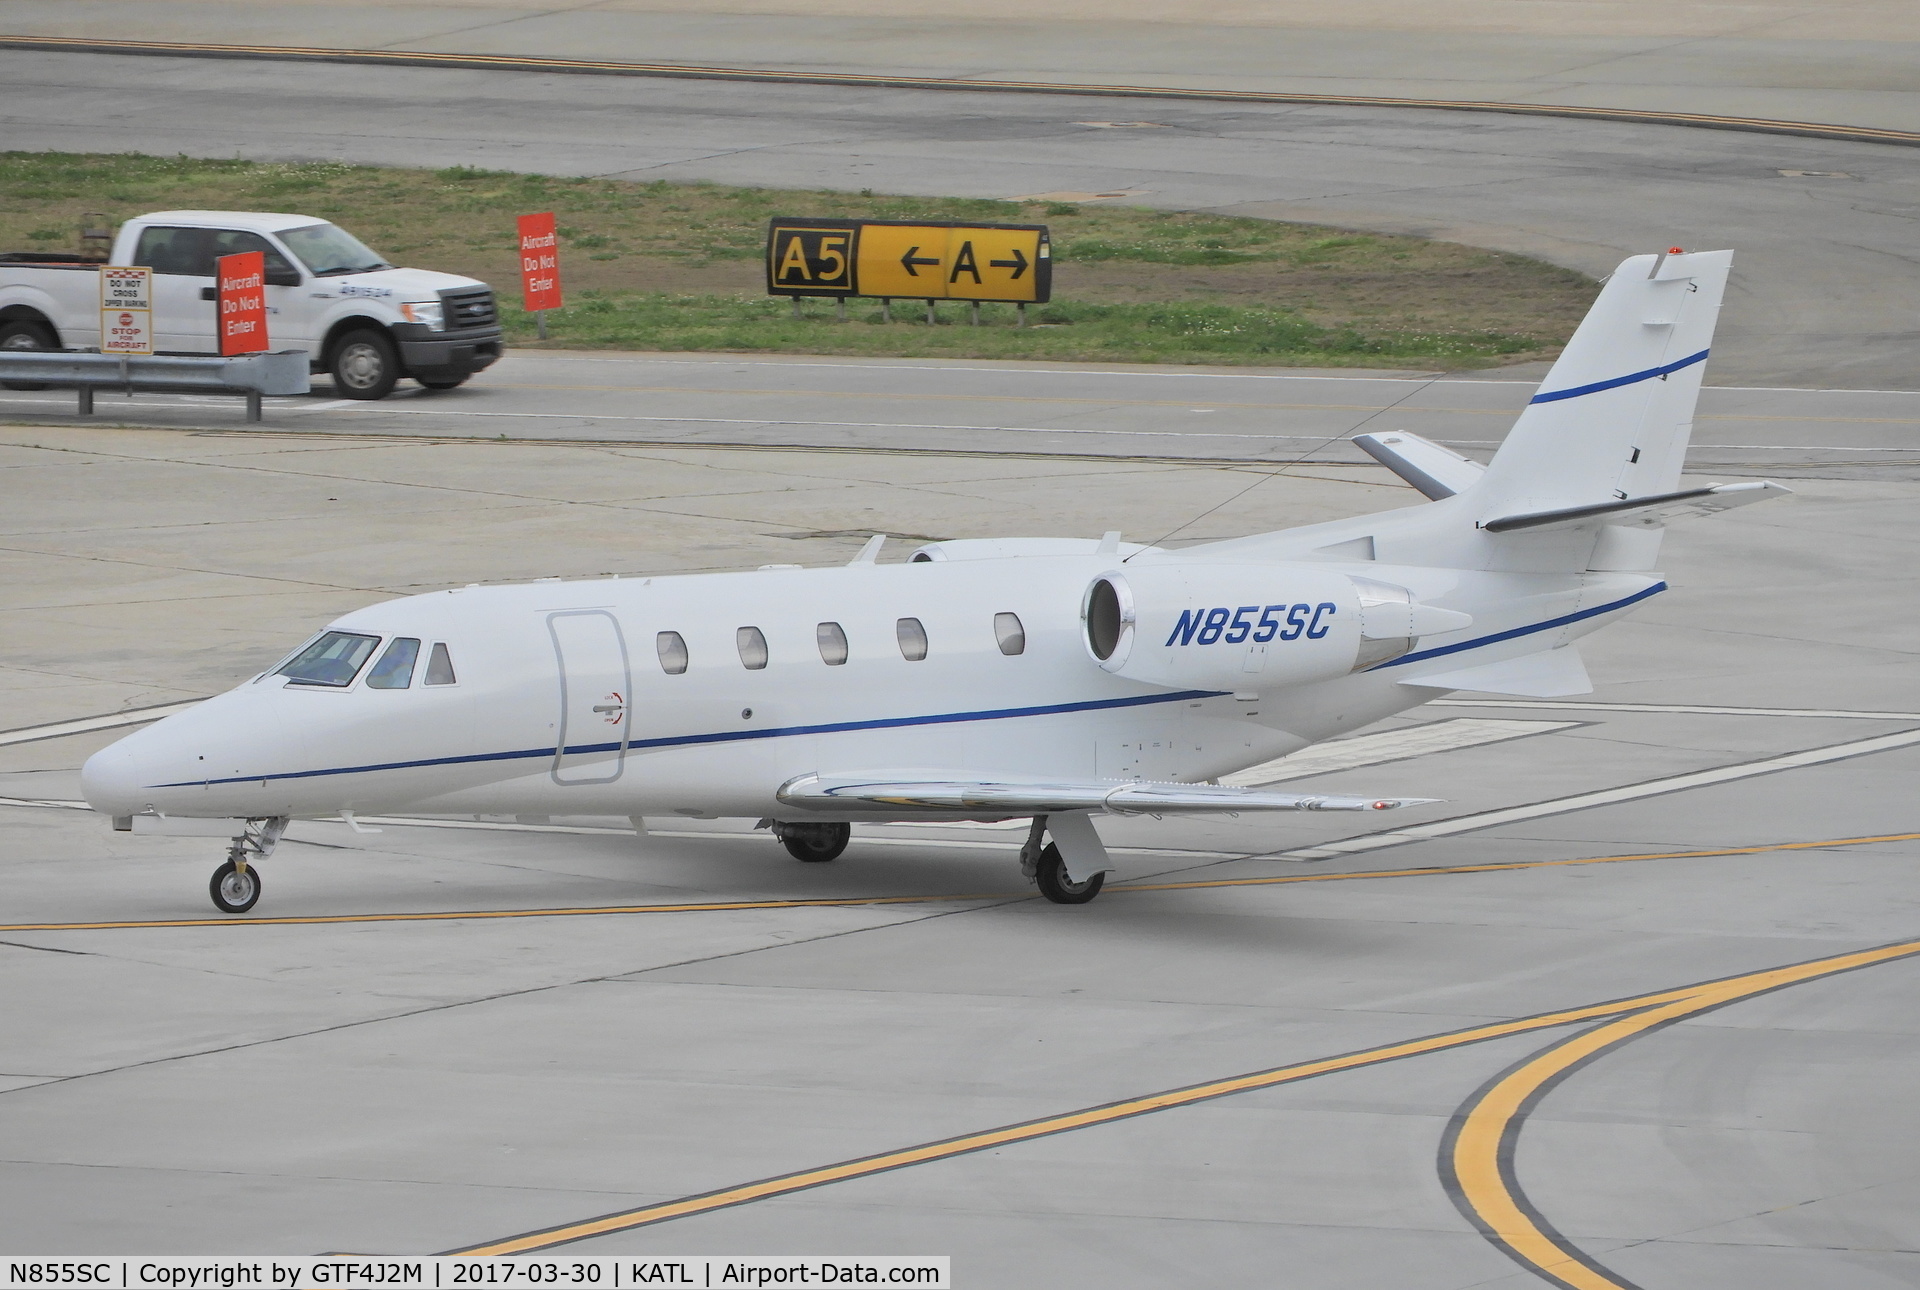 N855SC, 2008 Cessna 560XLS Citation Excel C/N 560-5763, N855SC  at Atlanta 20.3.17